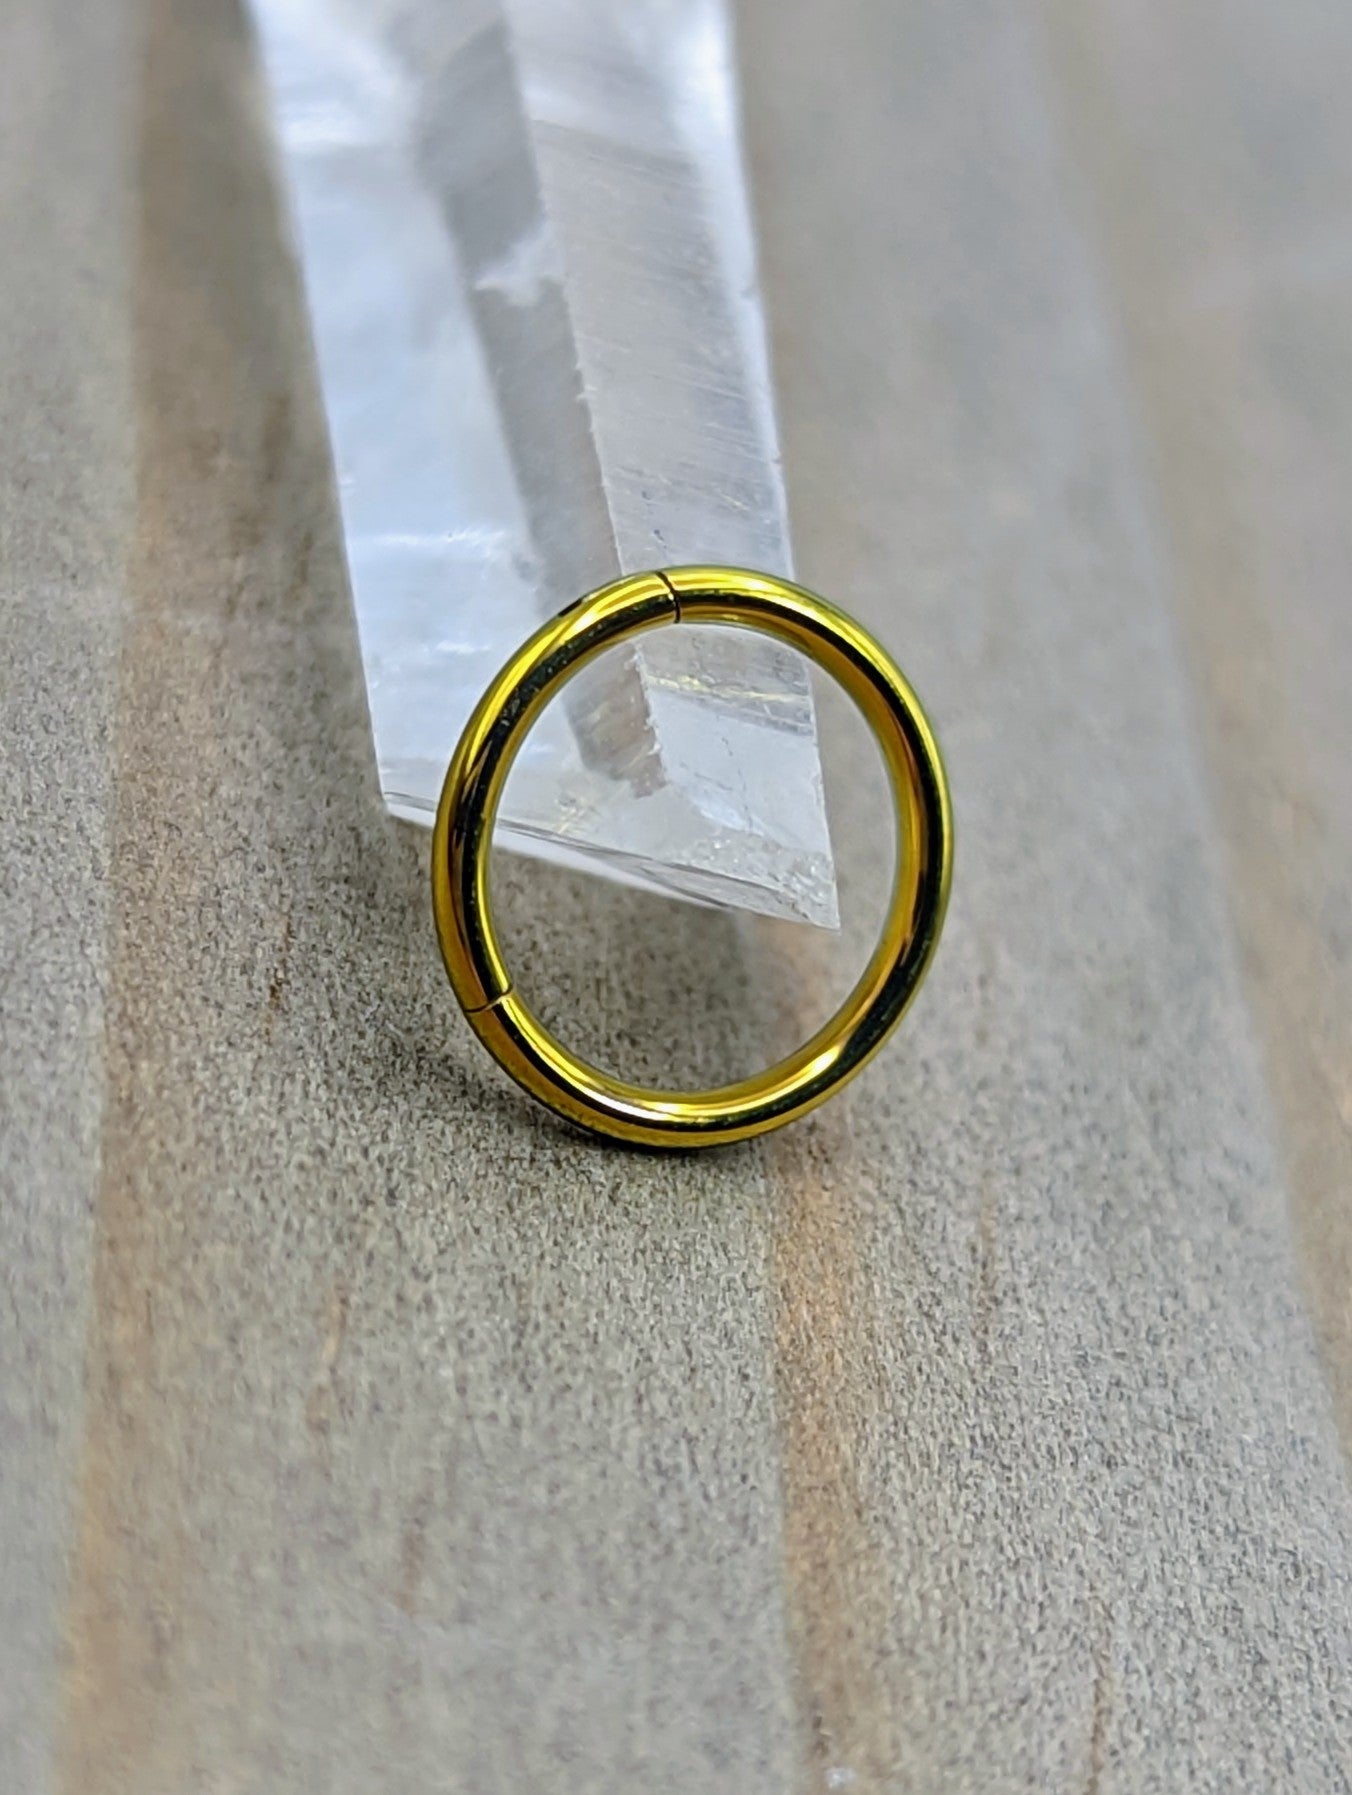 14 Gauge 9/16 Grey CZ Gem Rose Gold Tone Heart Nipple Ring Set